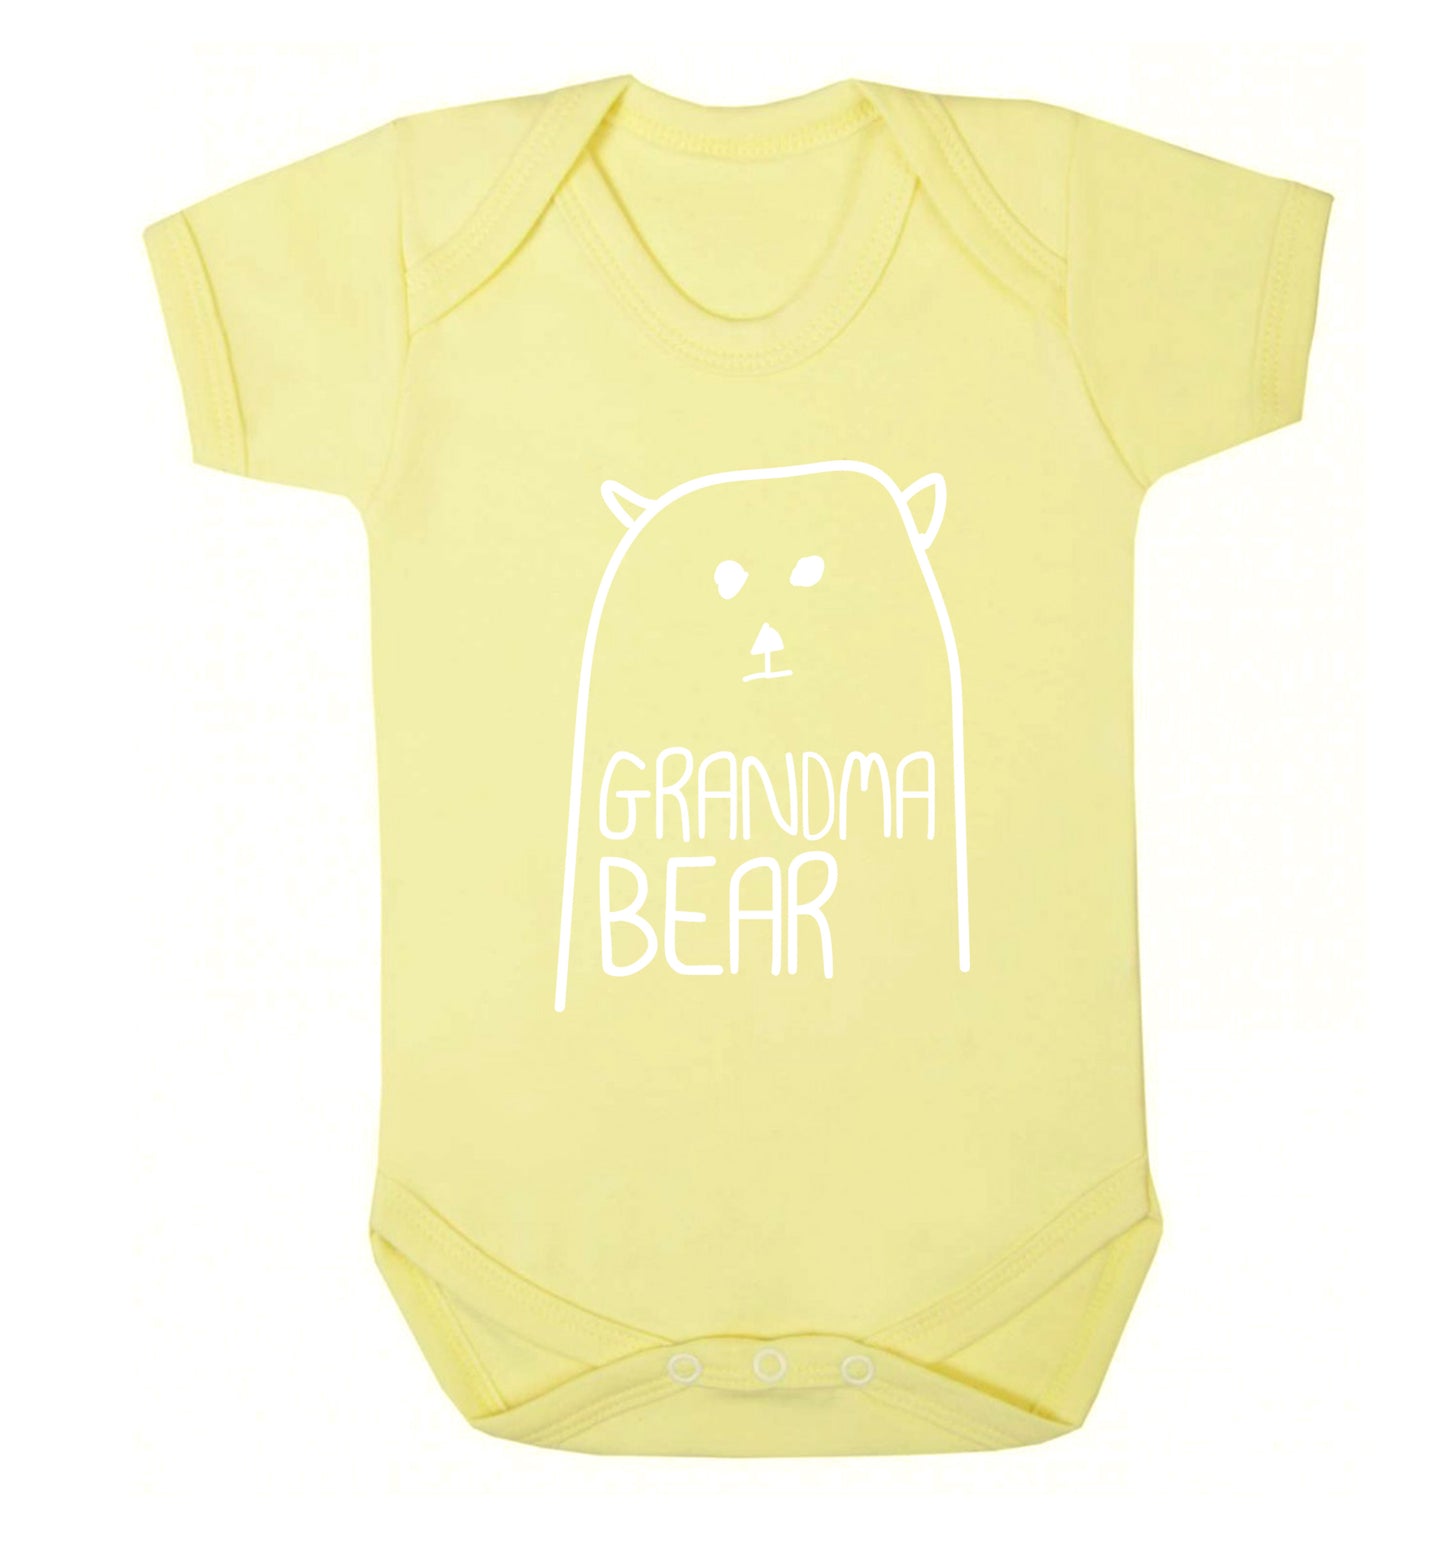 Grandma bear Baby Vest pale yellow 18-24 months